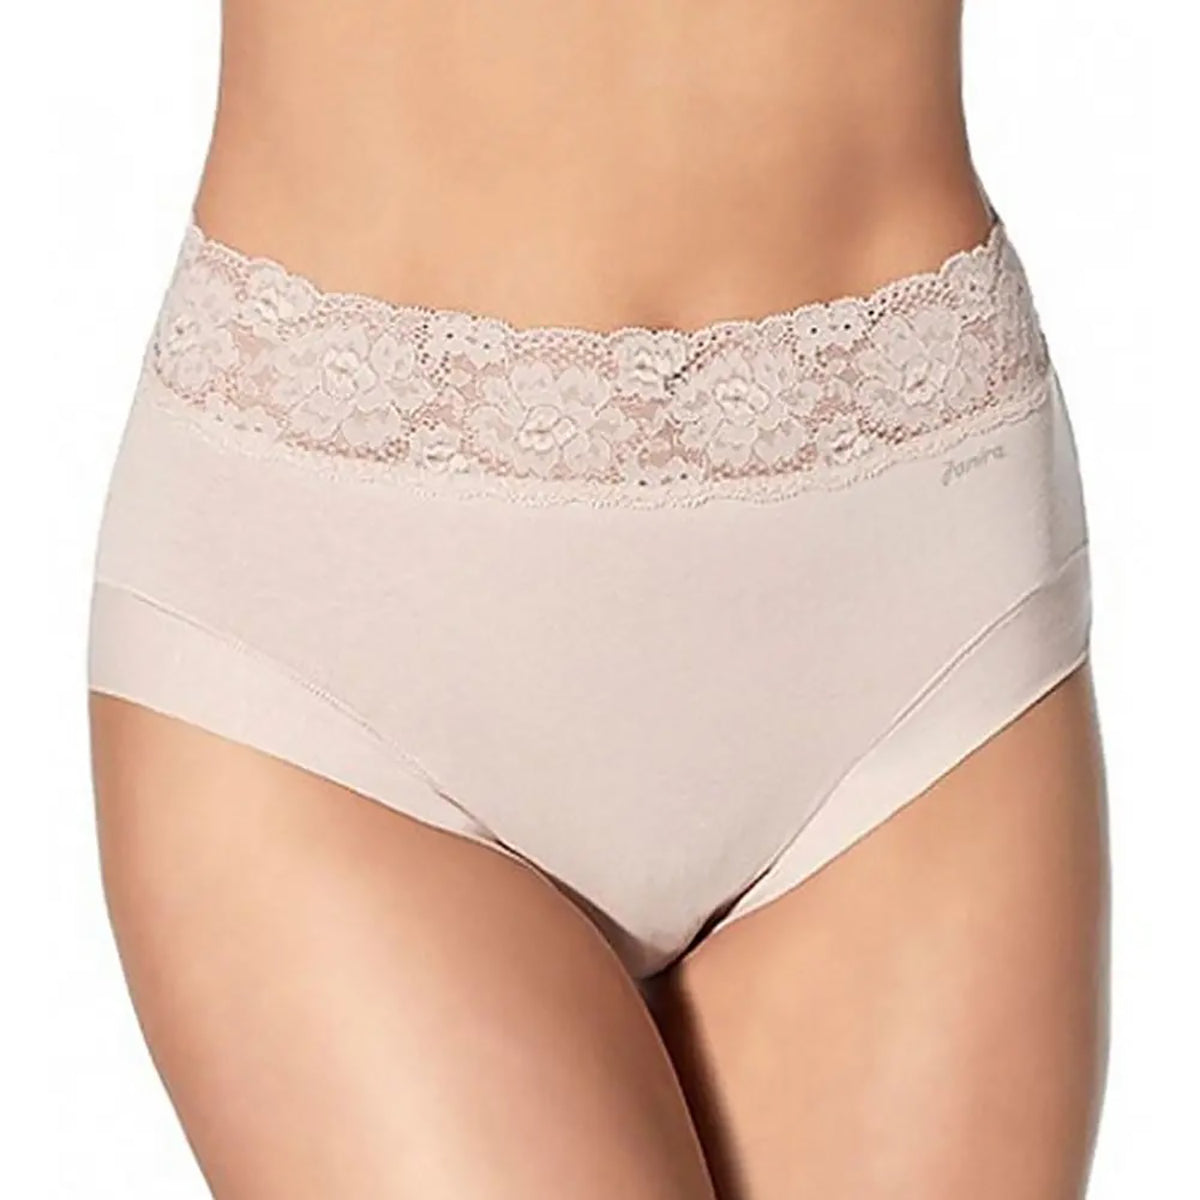 Bravado Underwear - Lingerie fit for a queen! That's right ladies